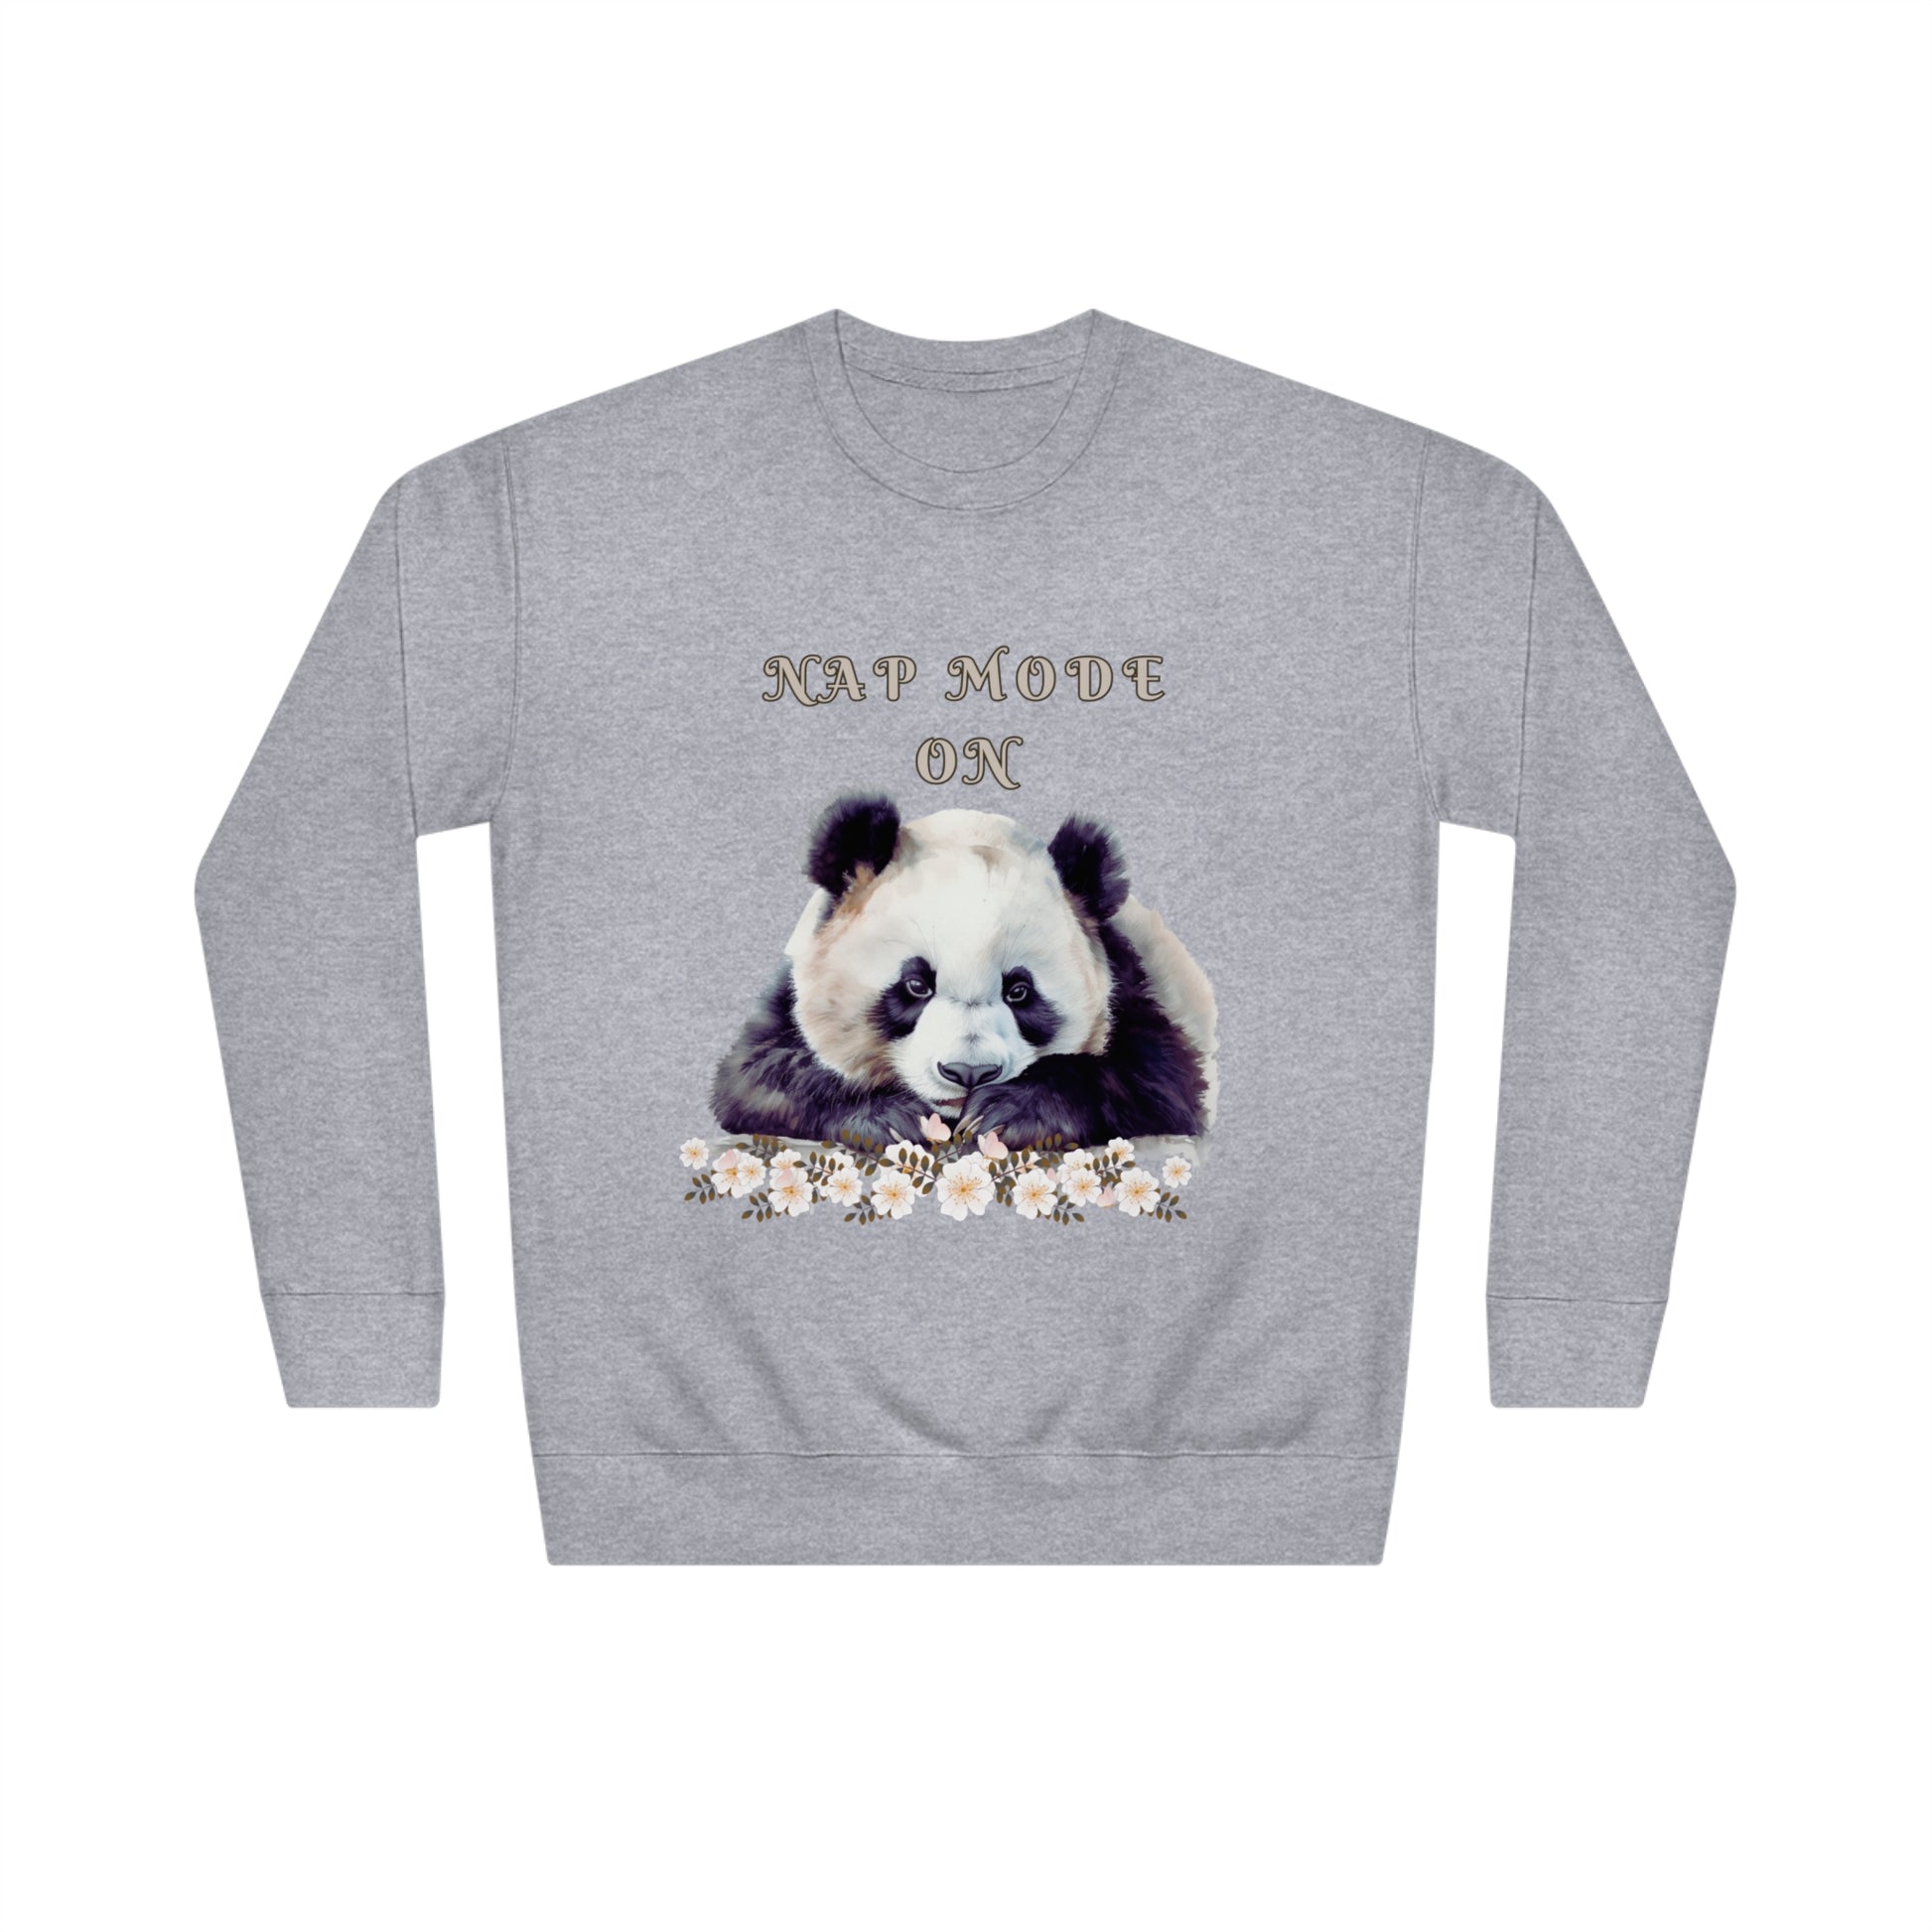 Lazy Panda Nap Mode Sweatshirt | Embrace Cozy Relaxation | Panda Lover Gift - Cozy Sweatshirt Sweatshirt Carbon Grey S 